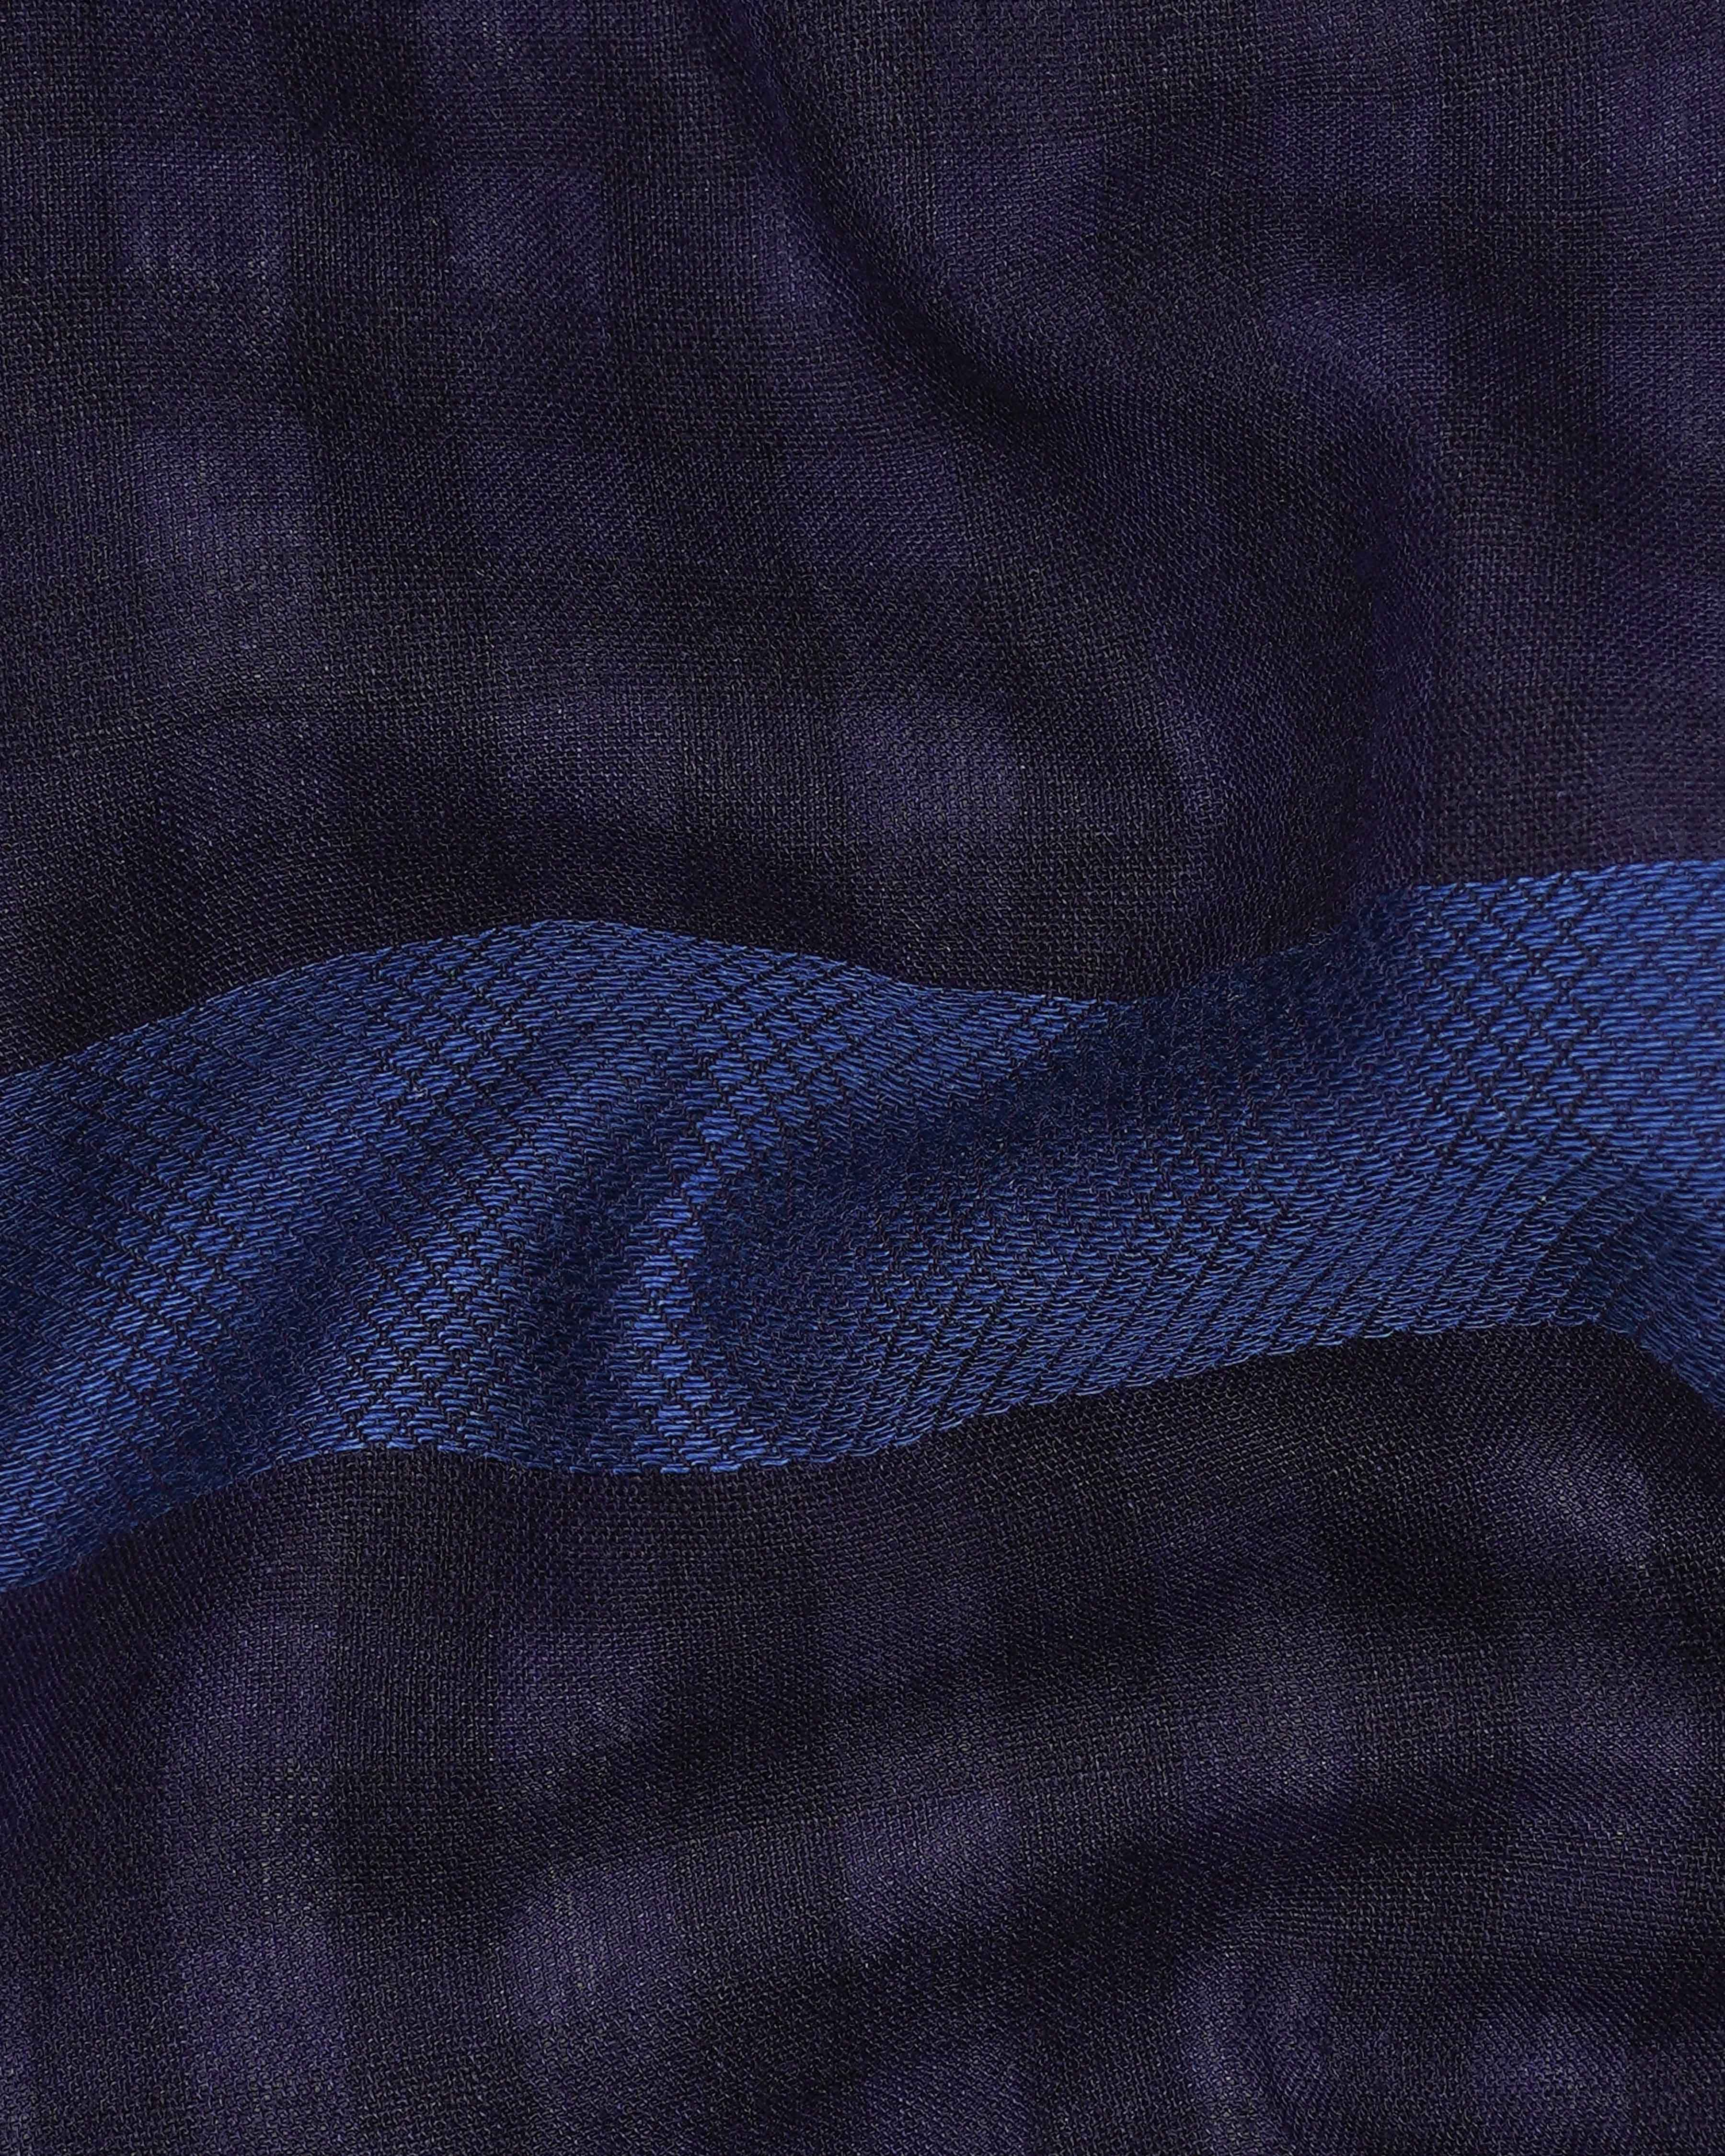 Baltic Sea Dark Blue with Meteorite Blue Striped Dobby Textured Premium Giza Cotton Shirt 8155-M-BLK-38, 8155-M-BLK-H-38, 8155-M-BLK-39, 8155-M-BLK-H-39, 8155-M-BLK-40, 8155-M-BLK-H-40, 8155-M-BLK-42, 8155-M-BLK-H-42, 8155-M-BLK-44, 8155-M-BLK-H-44, 8155-M-BLK-46, 8155-M-BLK-H-46, 8155-M-BLK-48, 8155-M-BLK-H-48, 8155-M-BLK-50, 8155-M-BLK-H-50, 8155-M-BLK-52, 8155-M-BLK-H-52